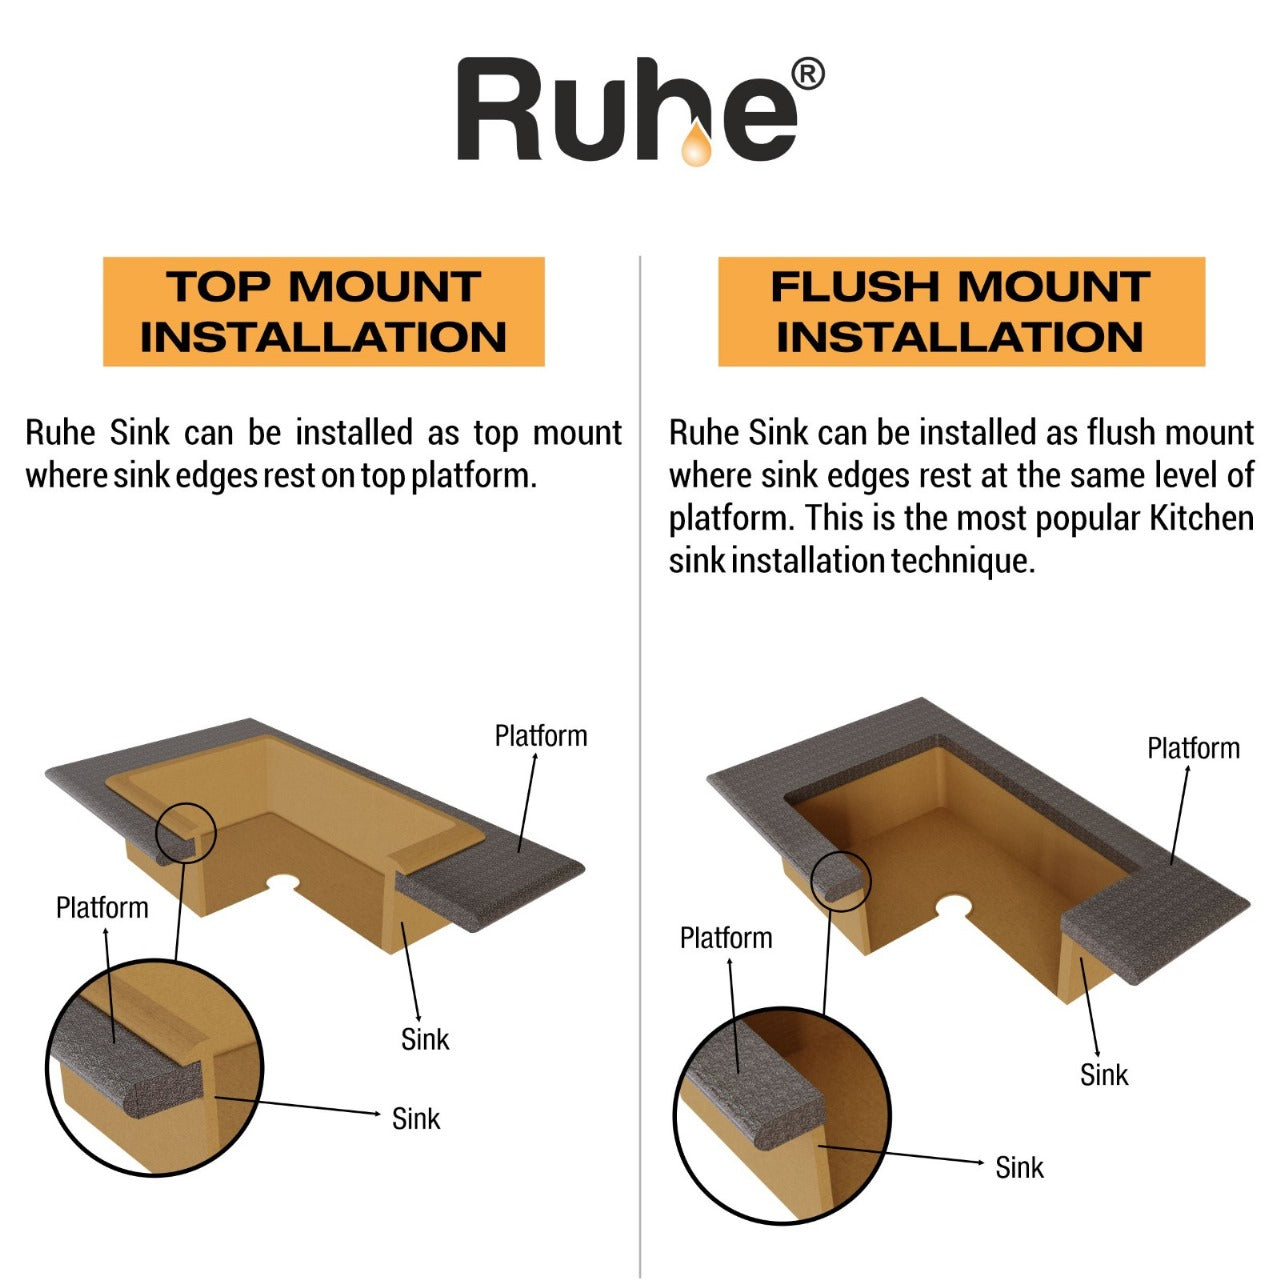 Quartz Single Bowl with Drainboard Kitchen Sink - Smoke Grey (36 x 18 x 9 inches) - by Ruhe®